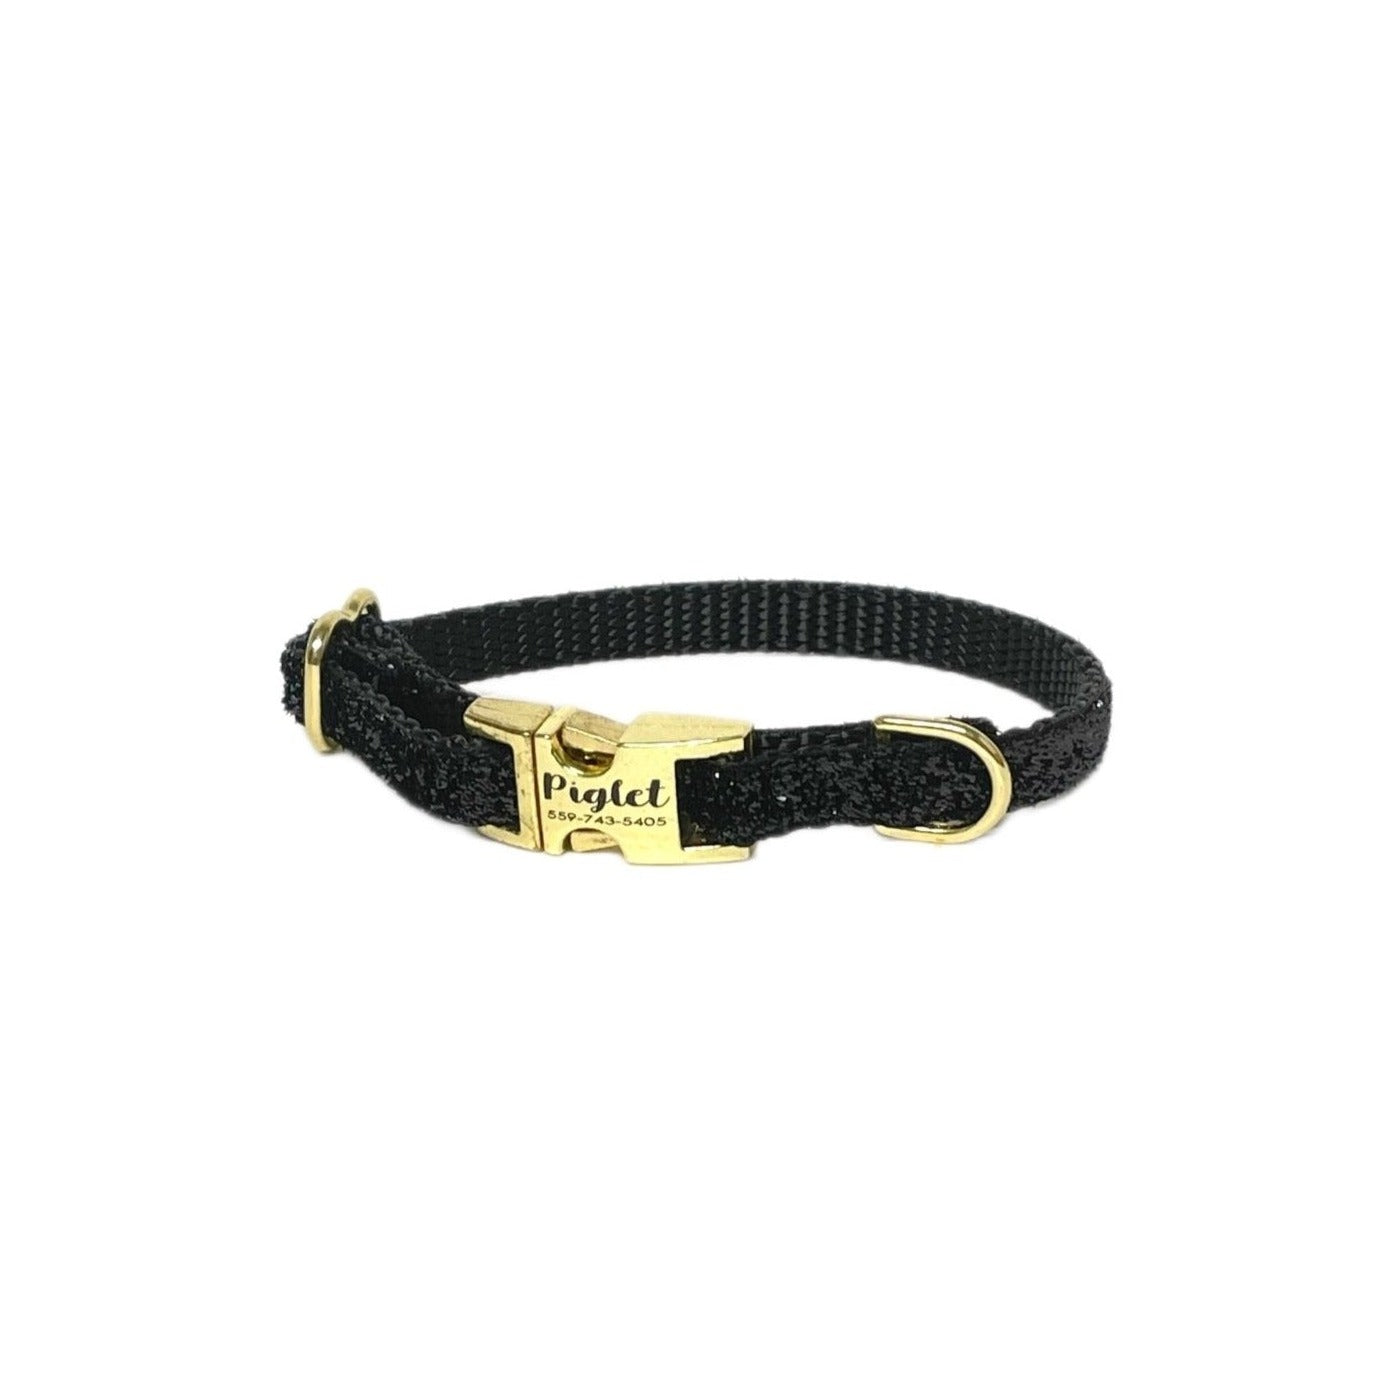 Dainty Black Spark personalized dog collar